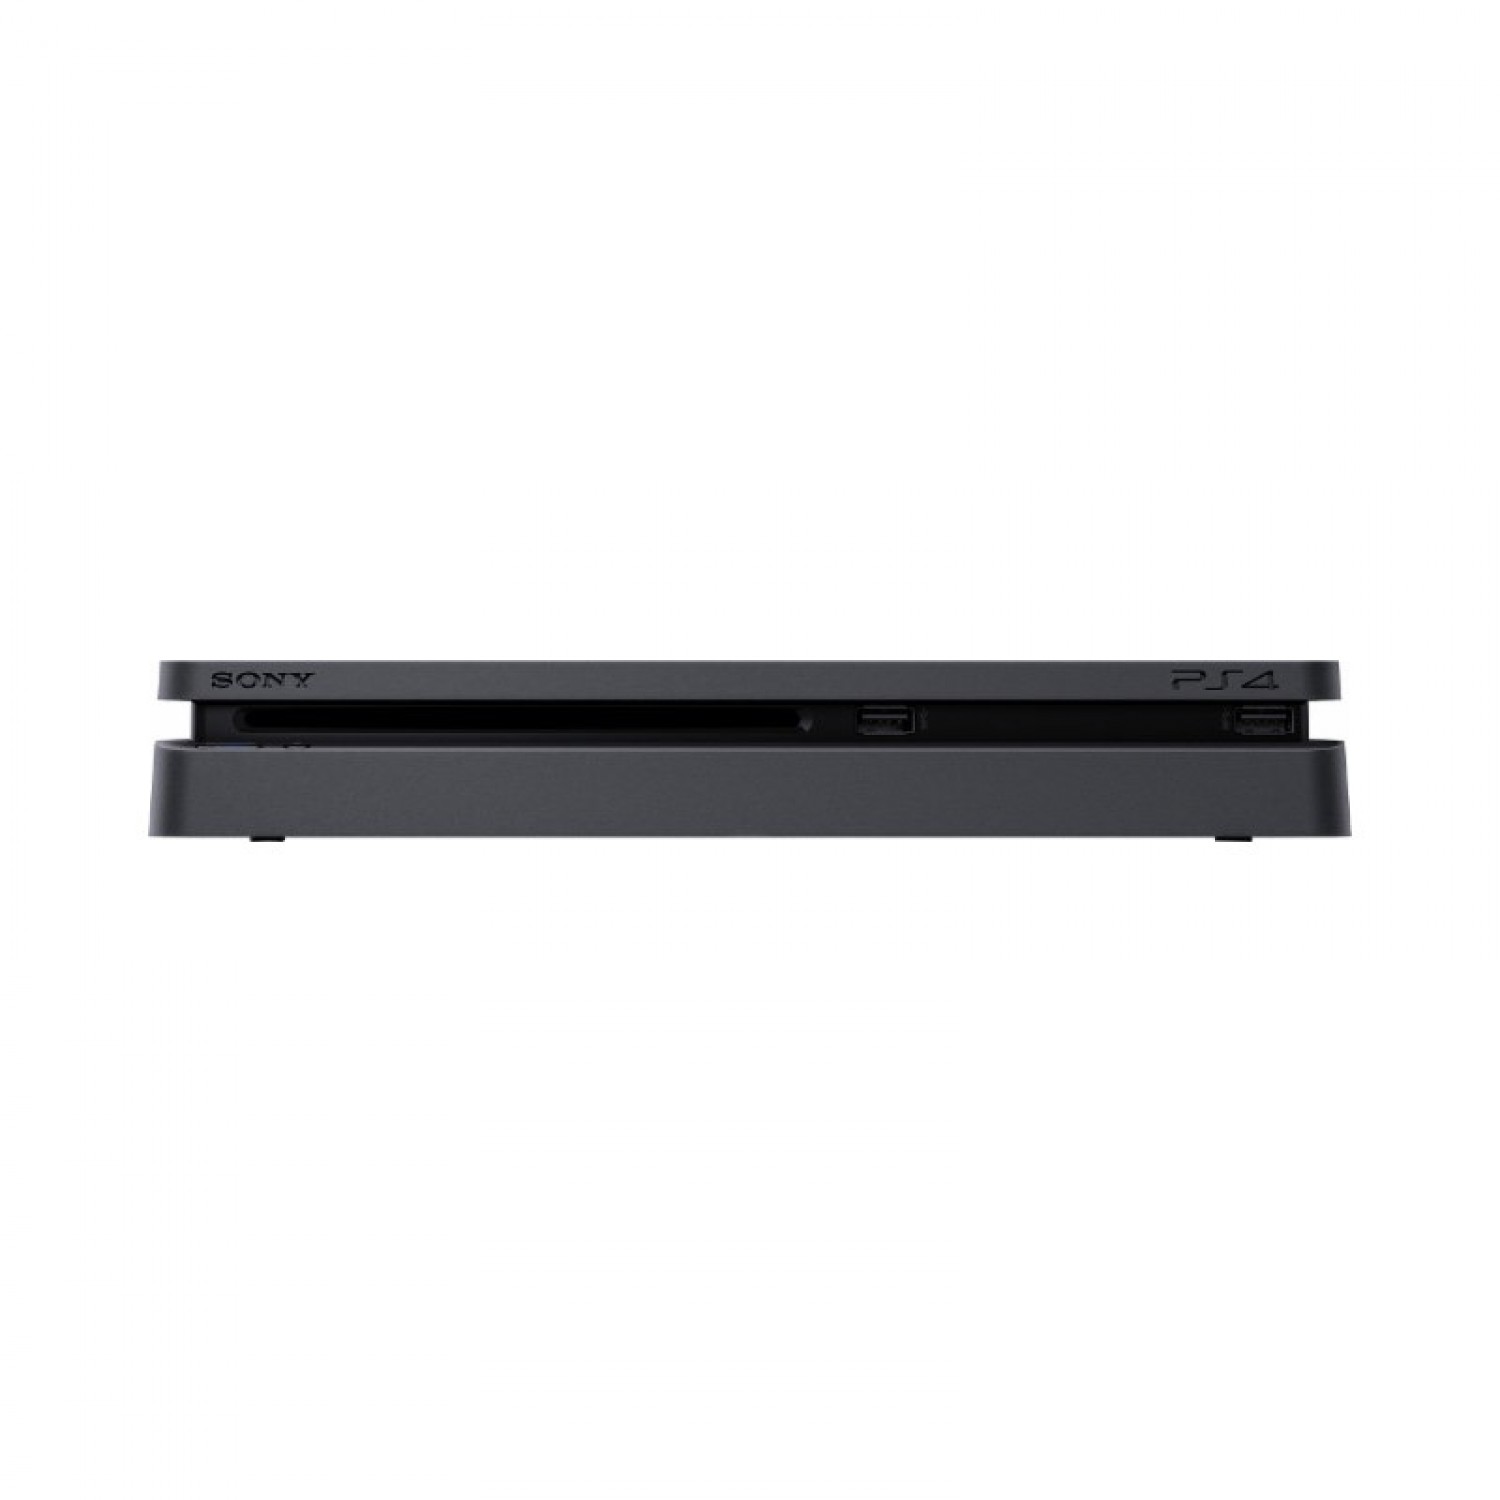   PS4 Slim 1 TB Region 2 Uncharted Bundle-3